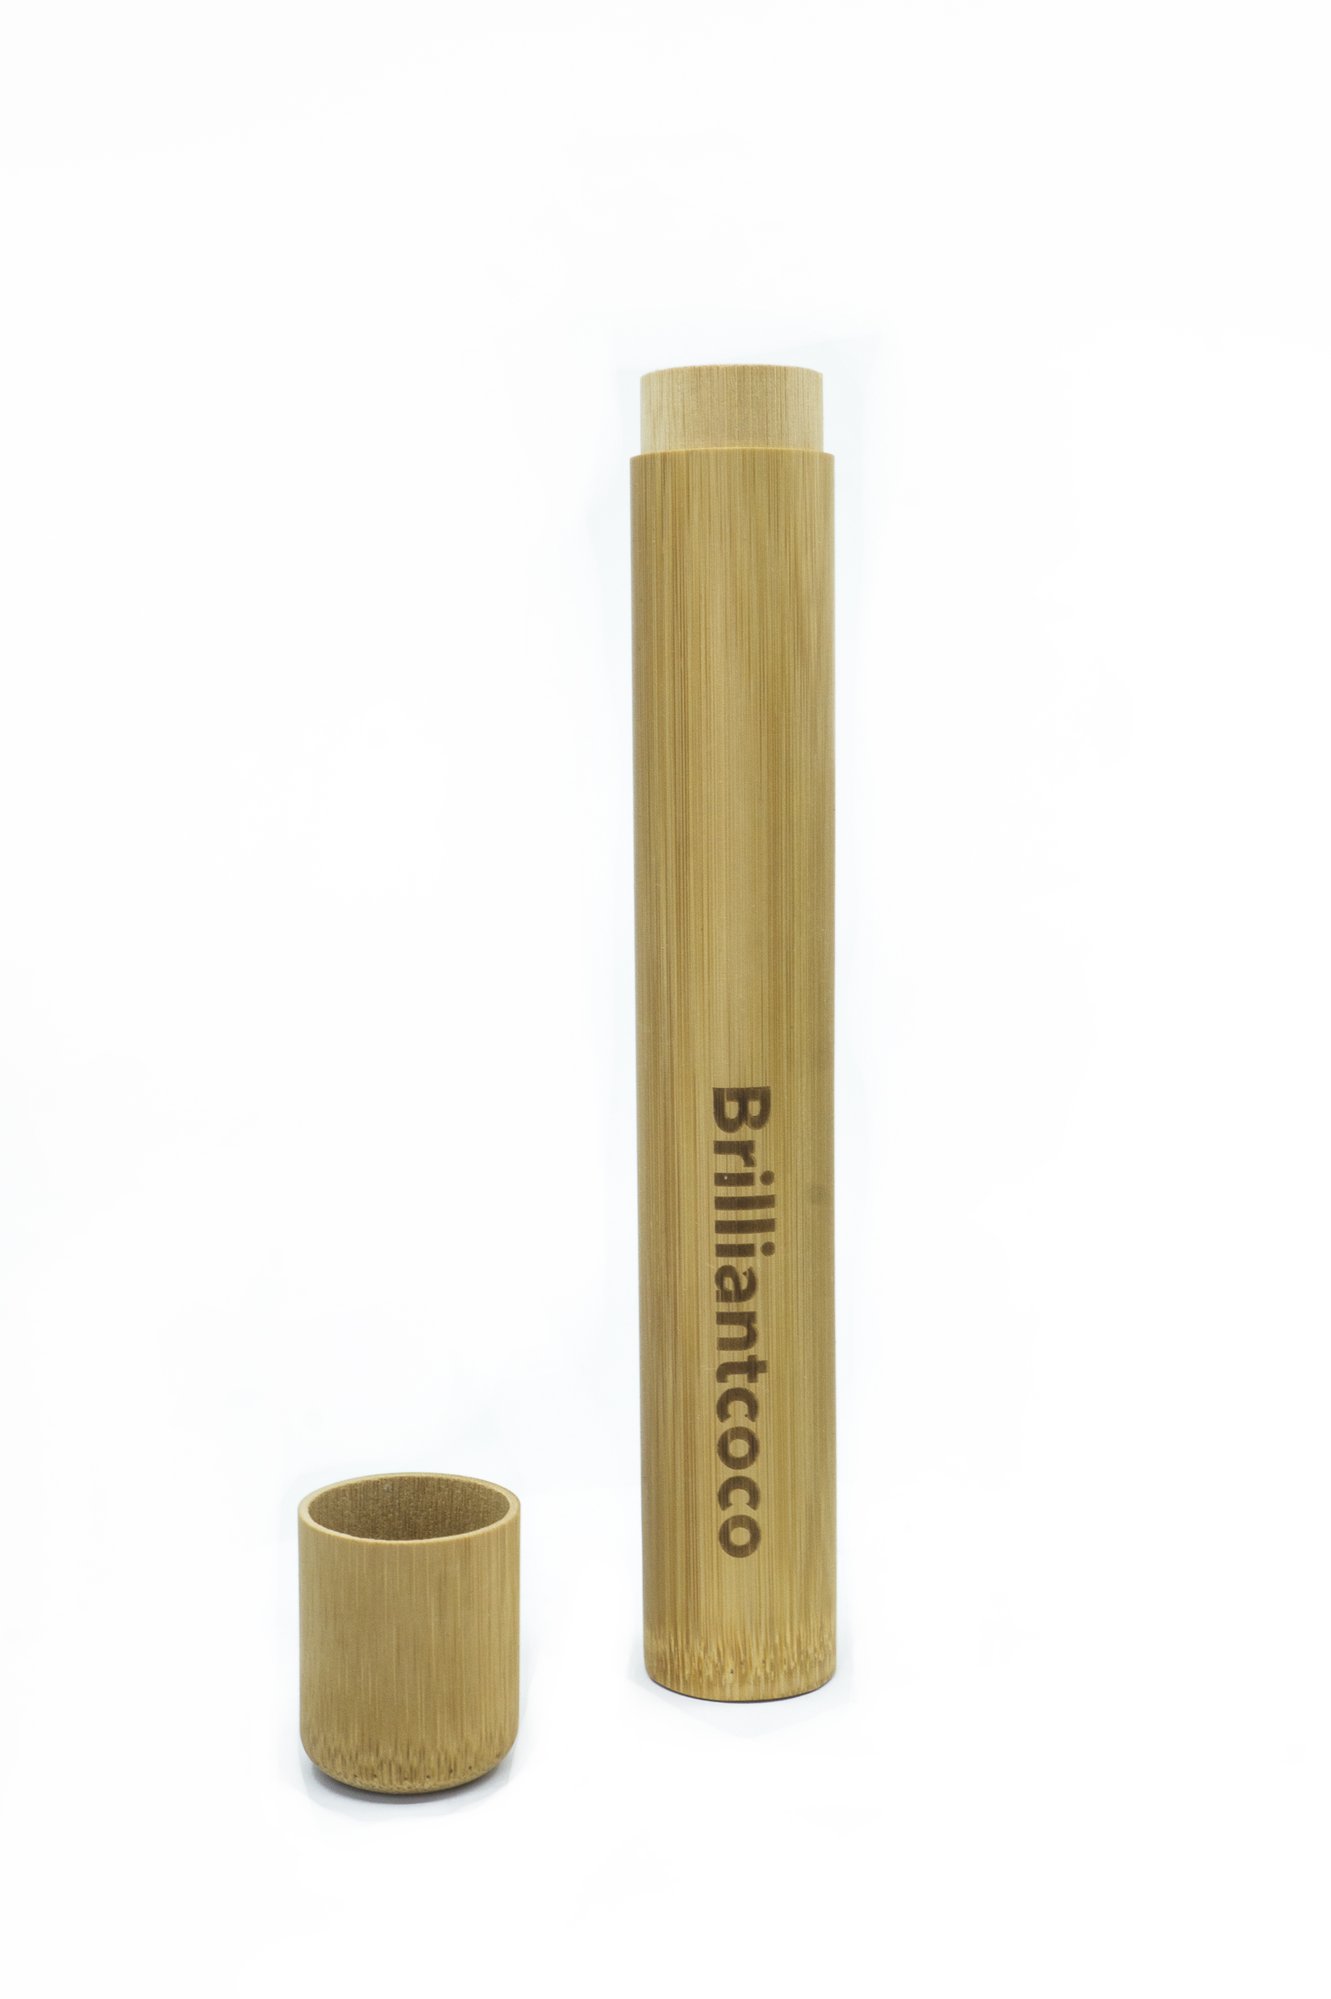 Brilliantcoco Brilliantcoco bambusové púzdro 1 ks